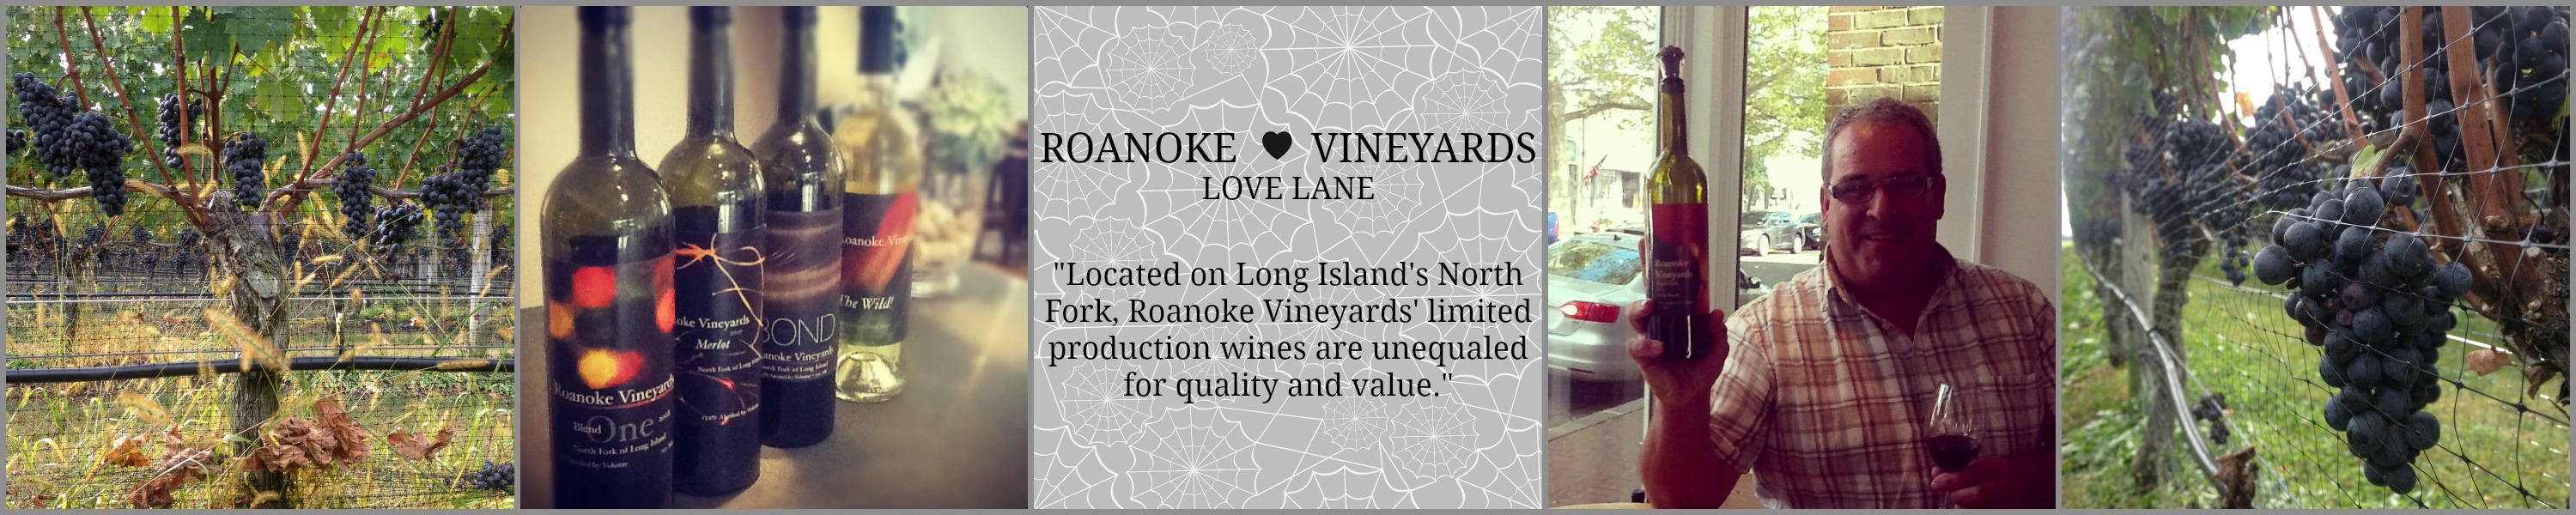 Roanoke Vineyards on Love Lane